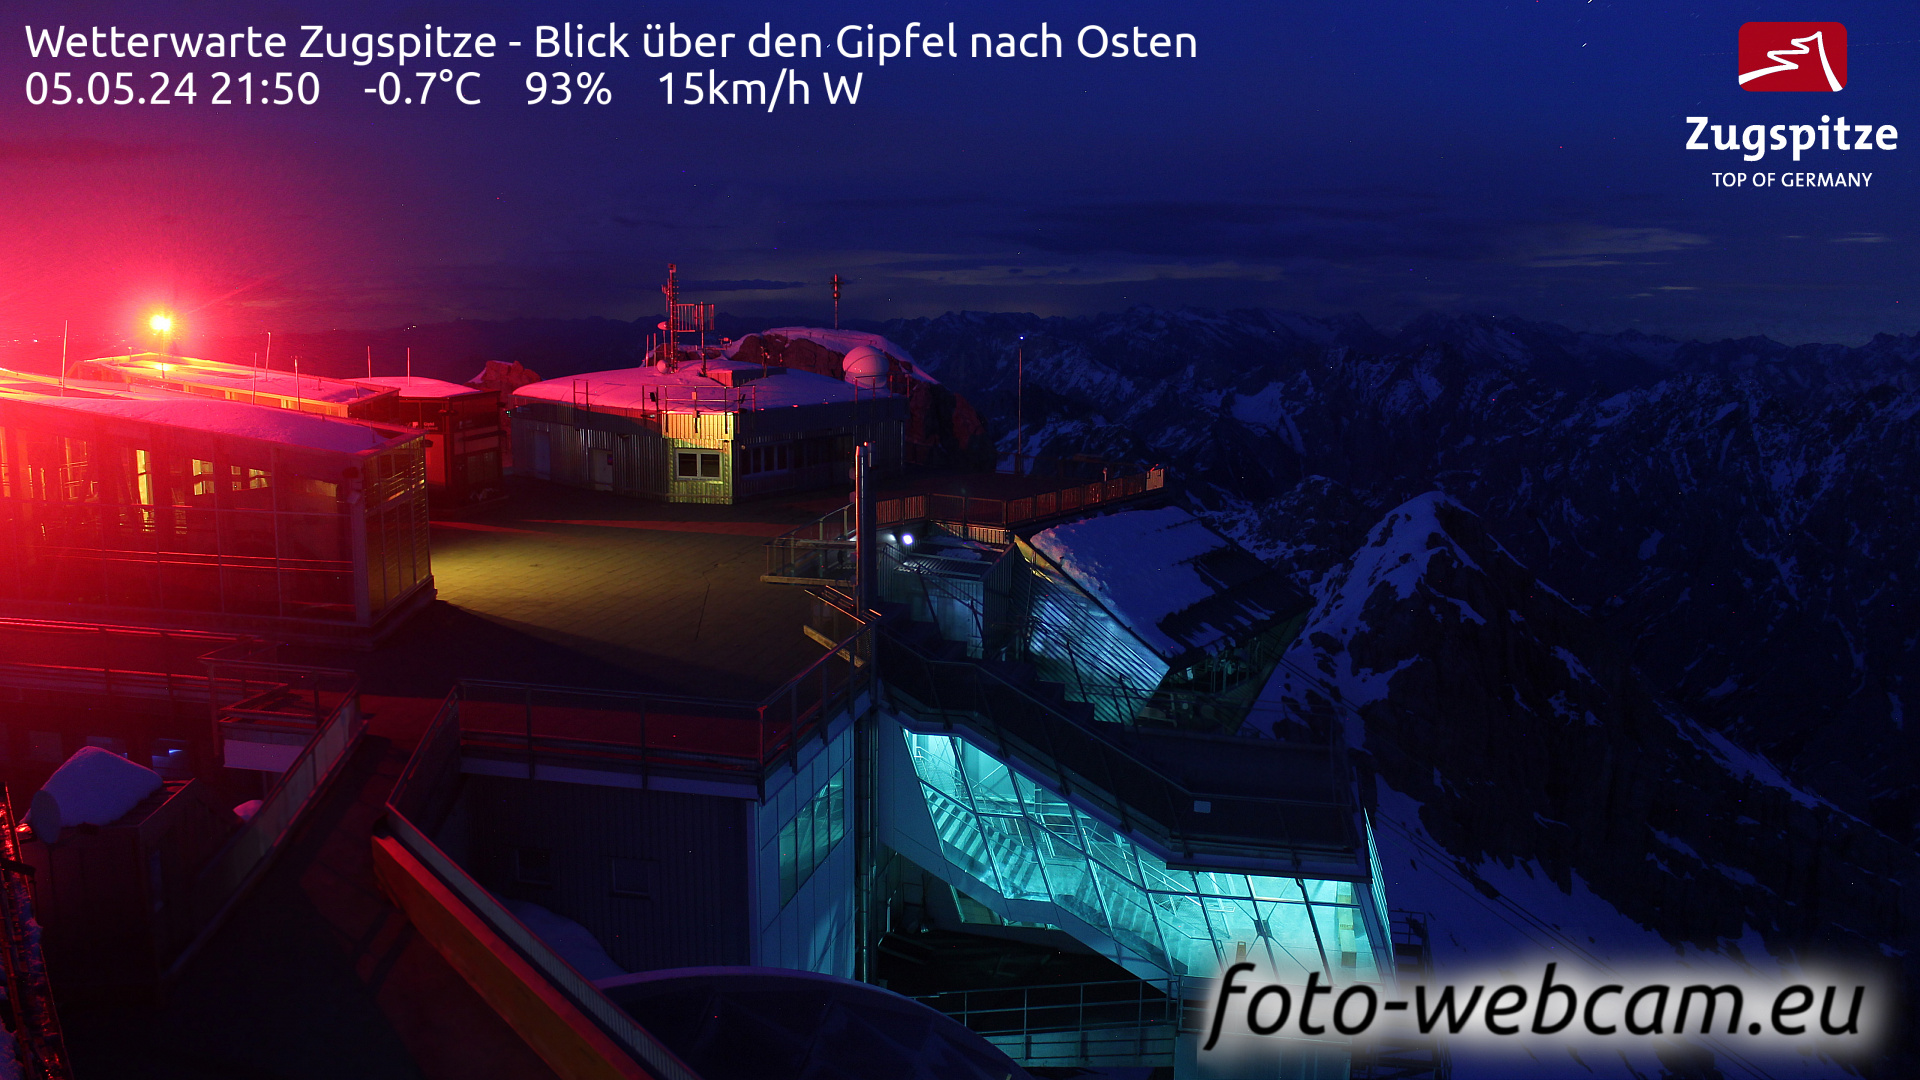 Zugspitze Sun. 21:55